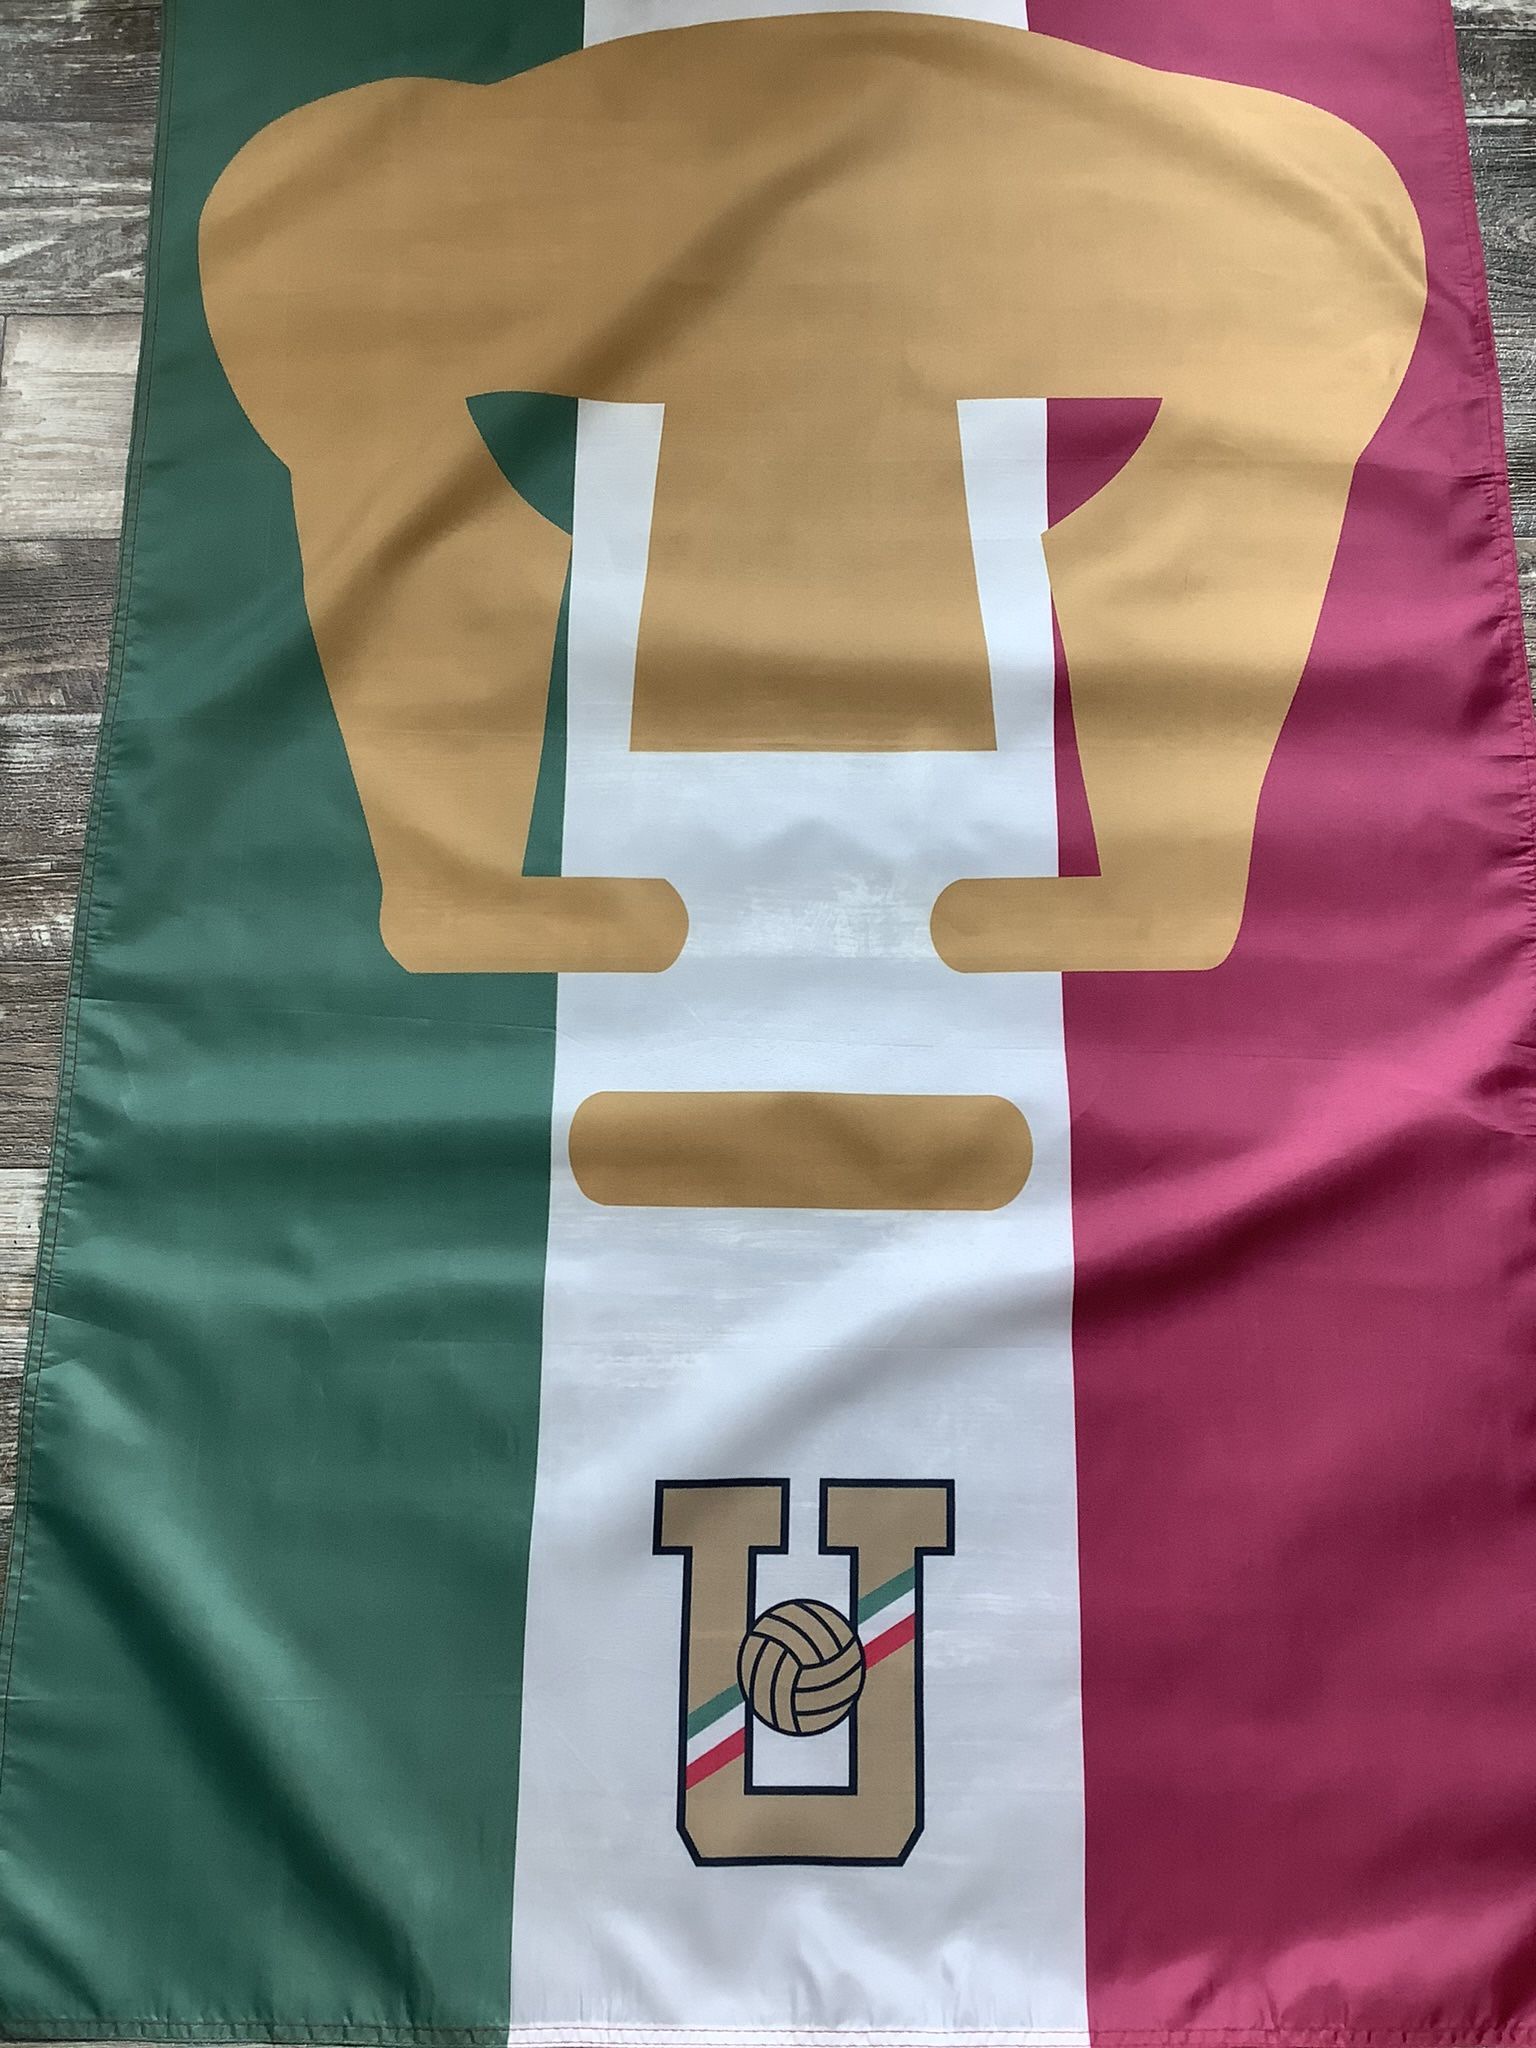 Pumas Unam Mexico Futbol Soccer Flag Bandera Retro (3'x5') Liga MX